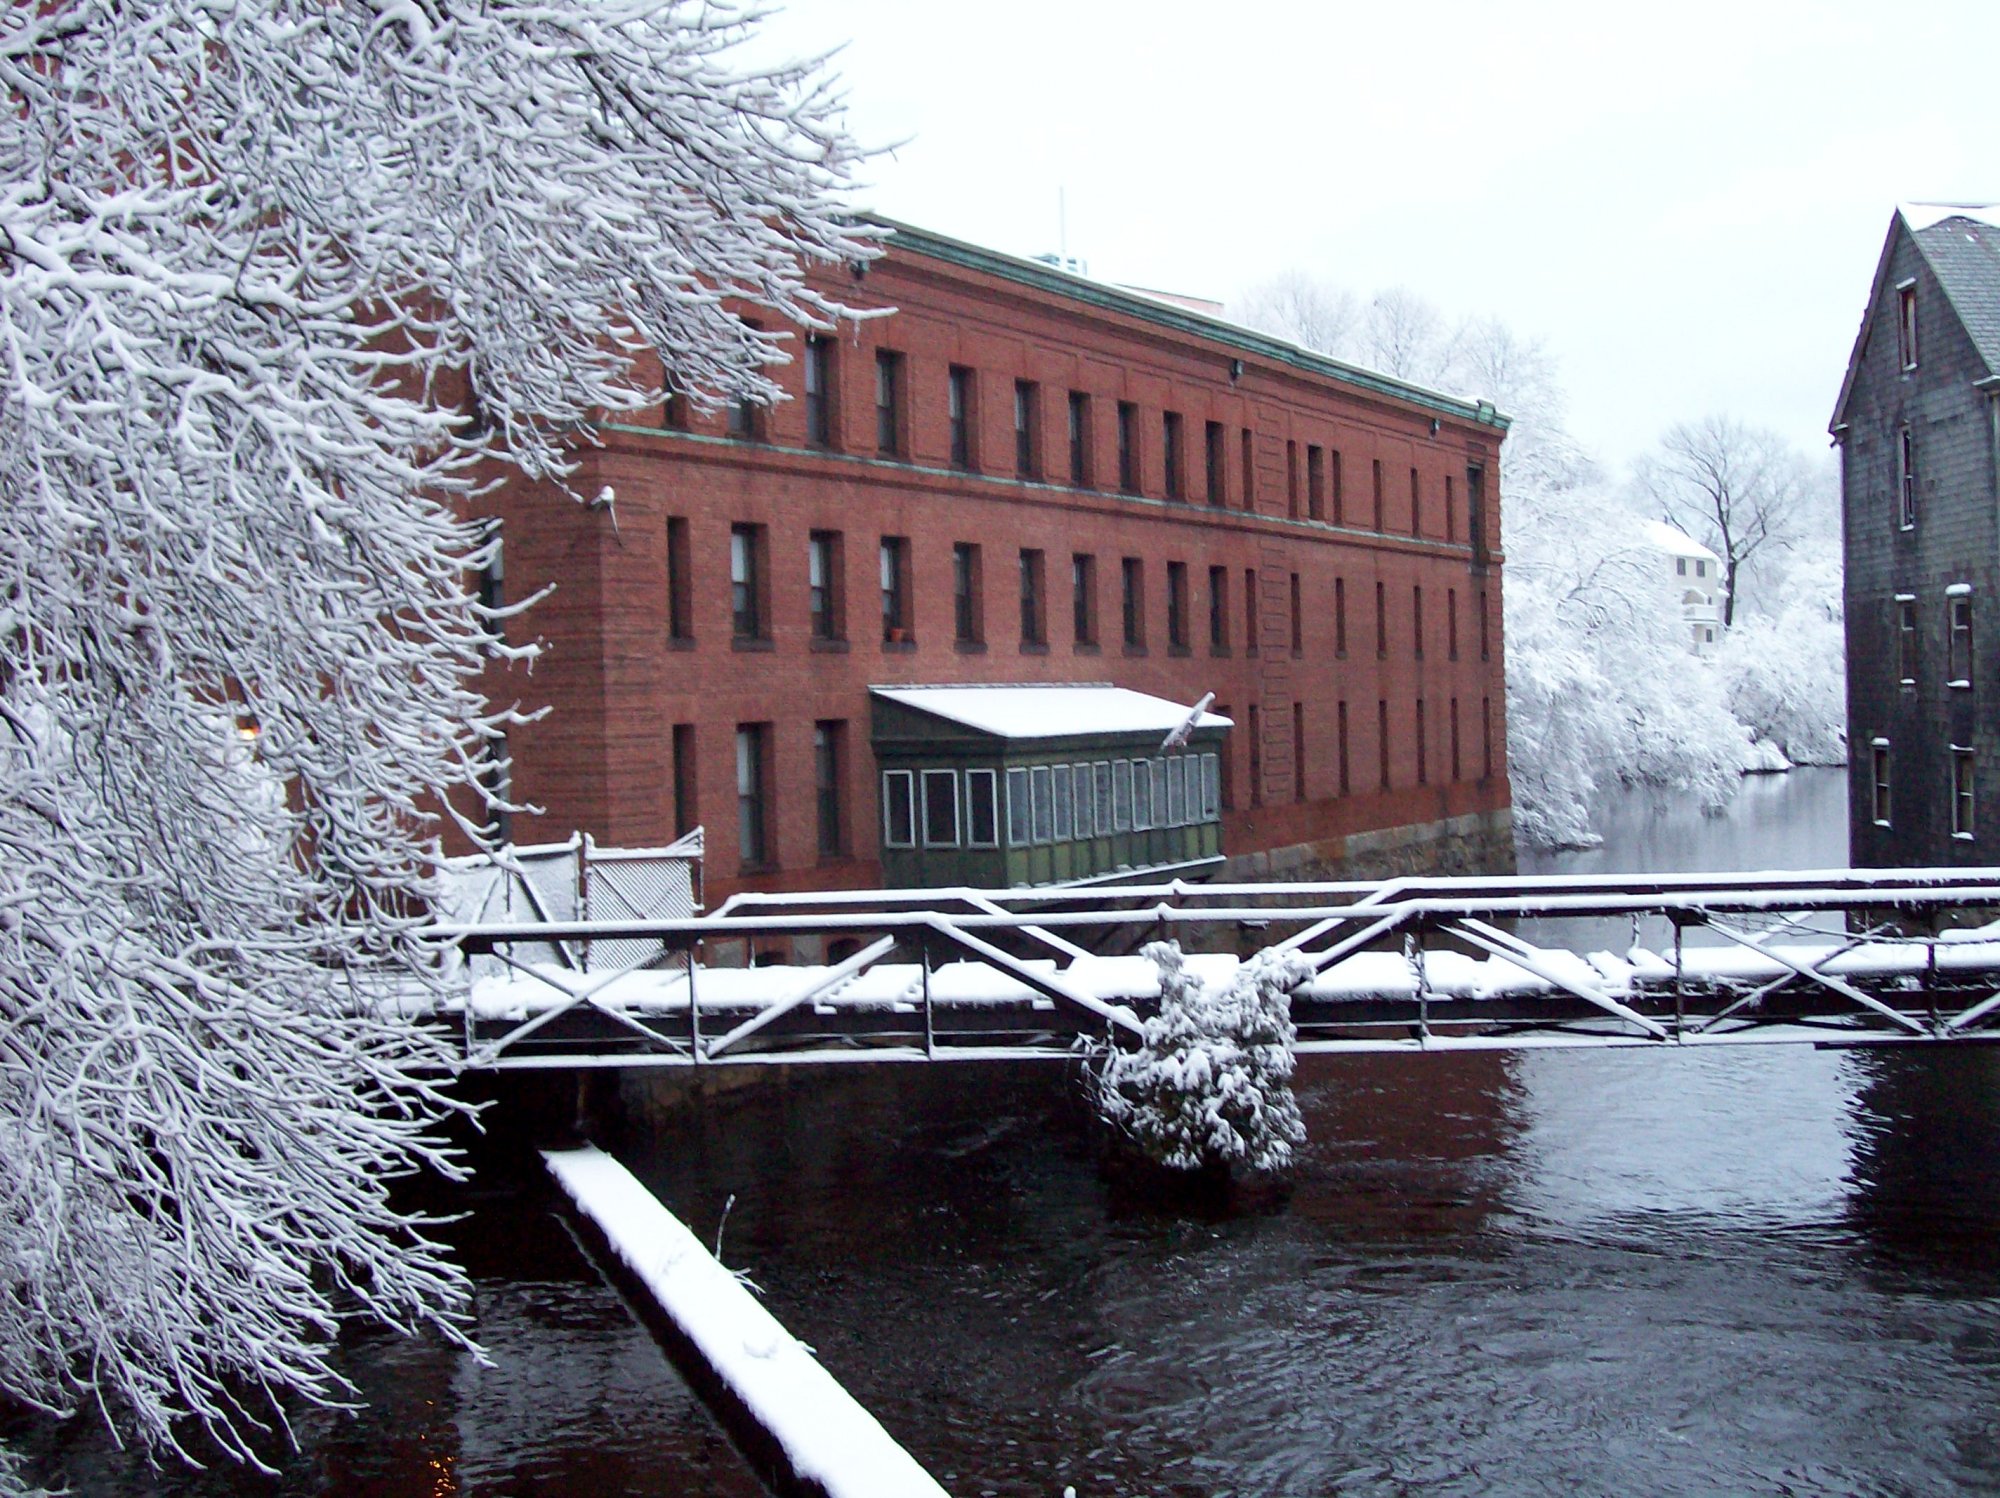 Baker Chocolate Factory in Winter.